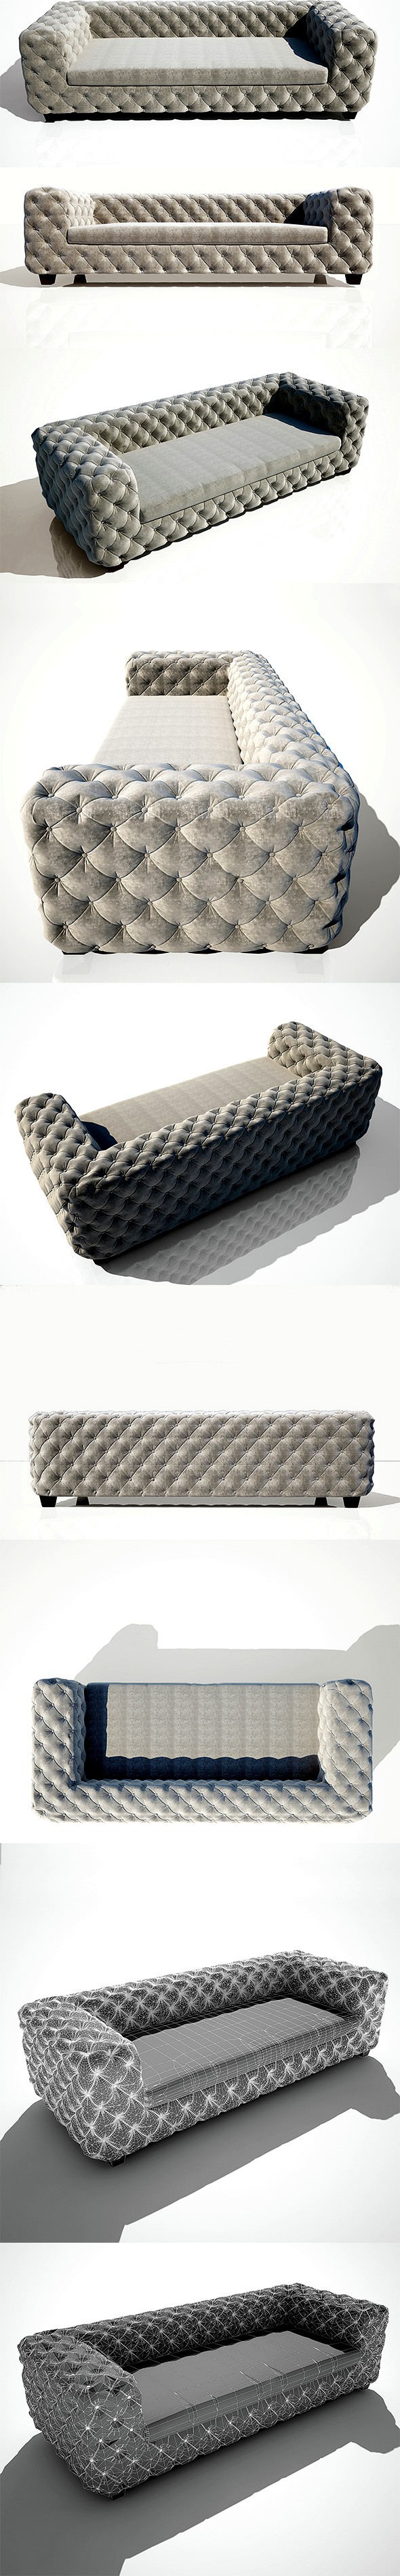 Sofa Desire Kare Design